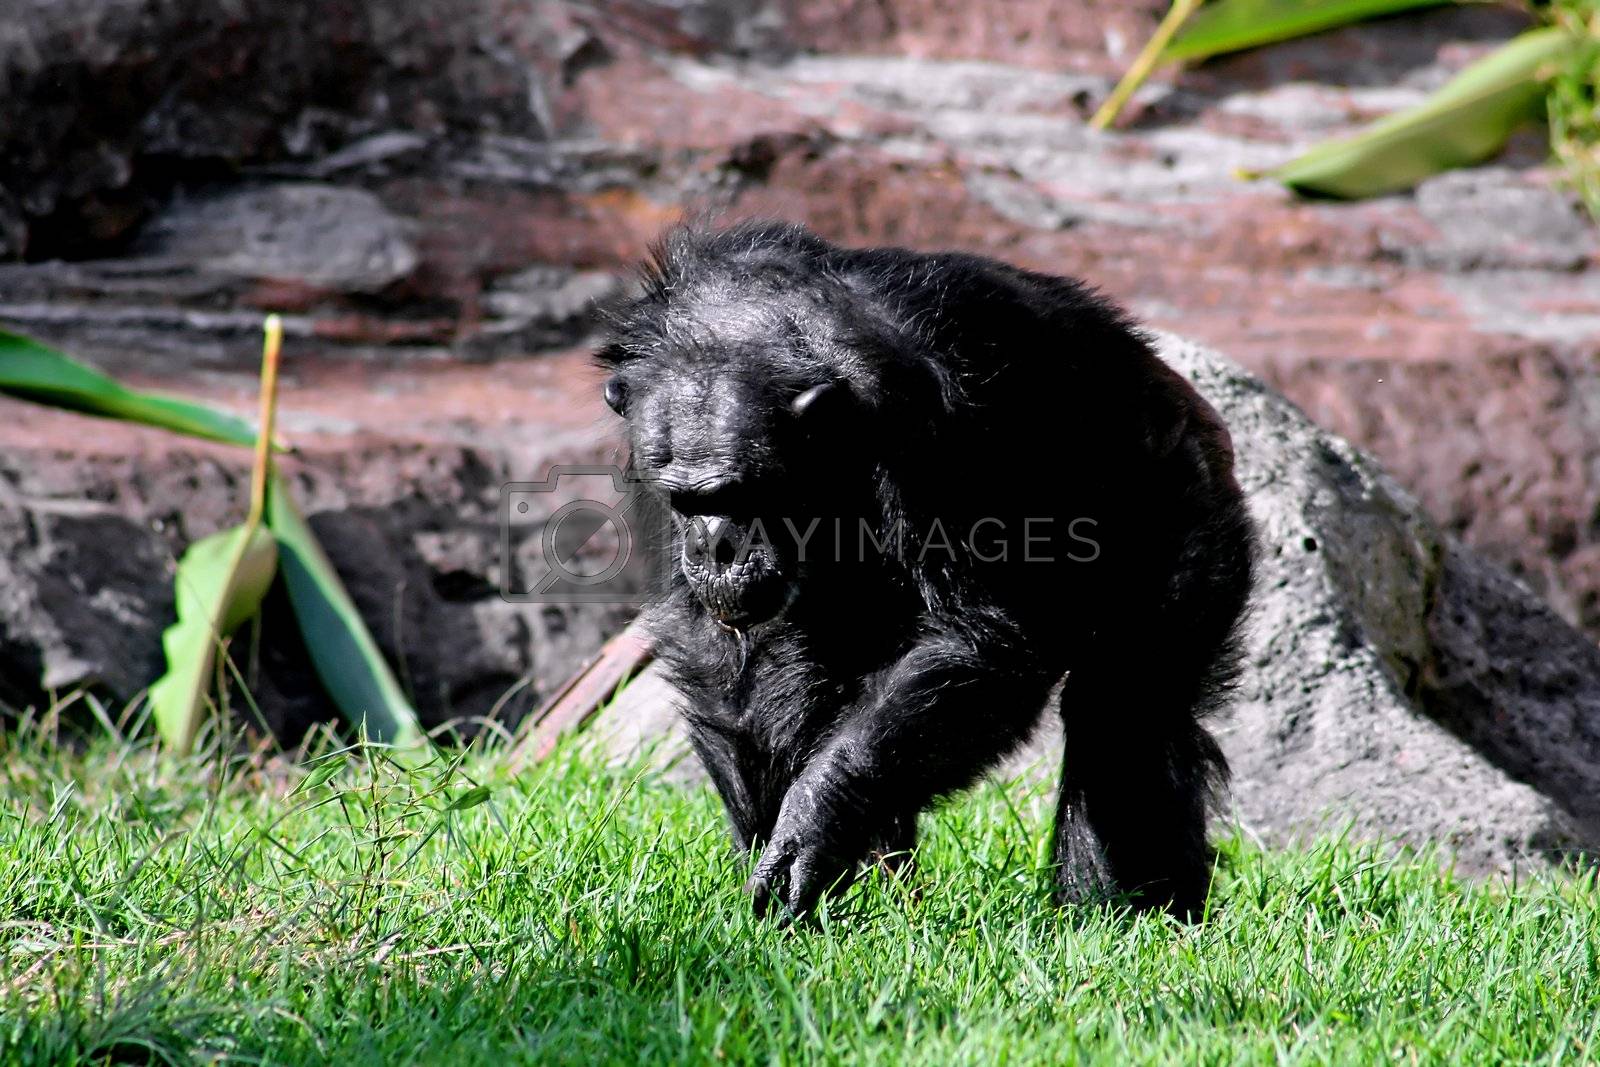 Royalty free image of Chimp by rogerrosentreter